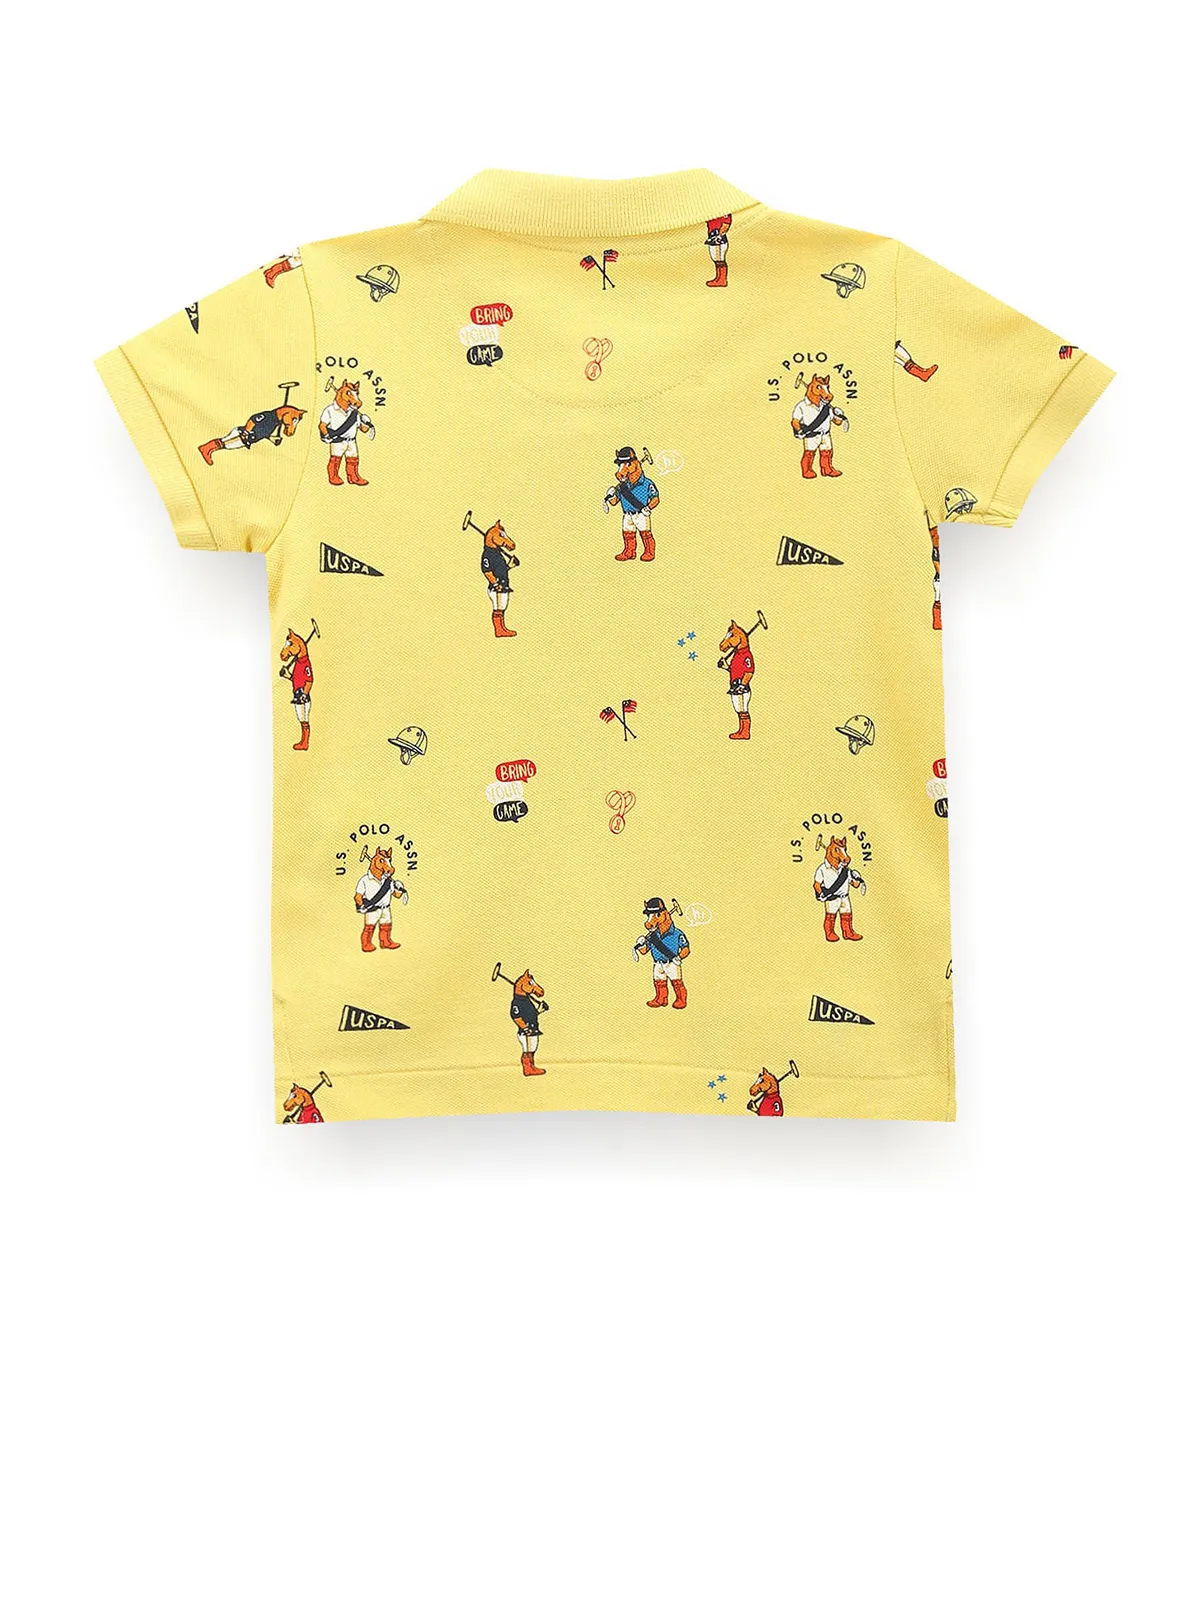 U S POLO ASSN yellow printed cotton polo t-shirt